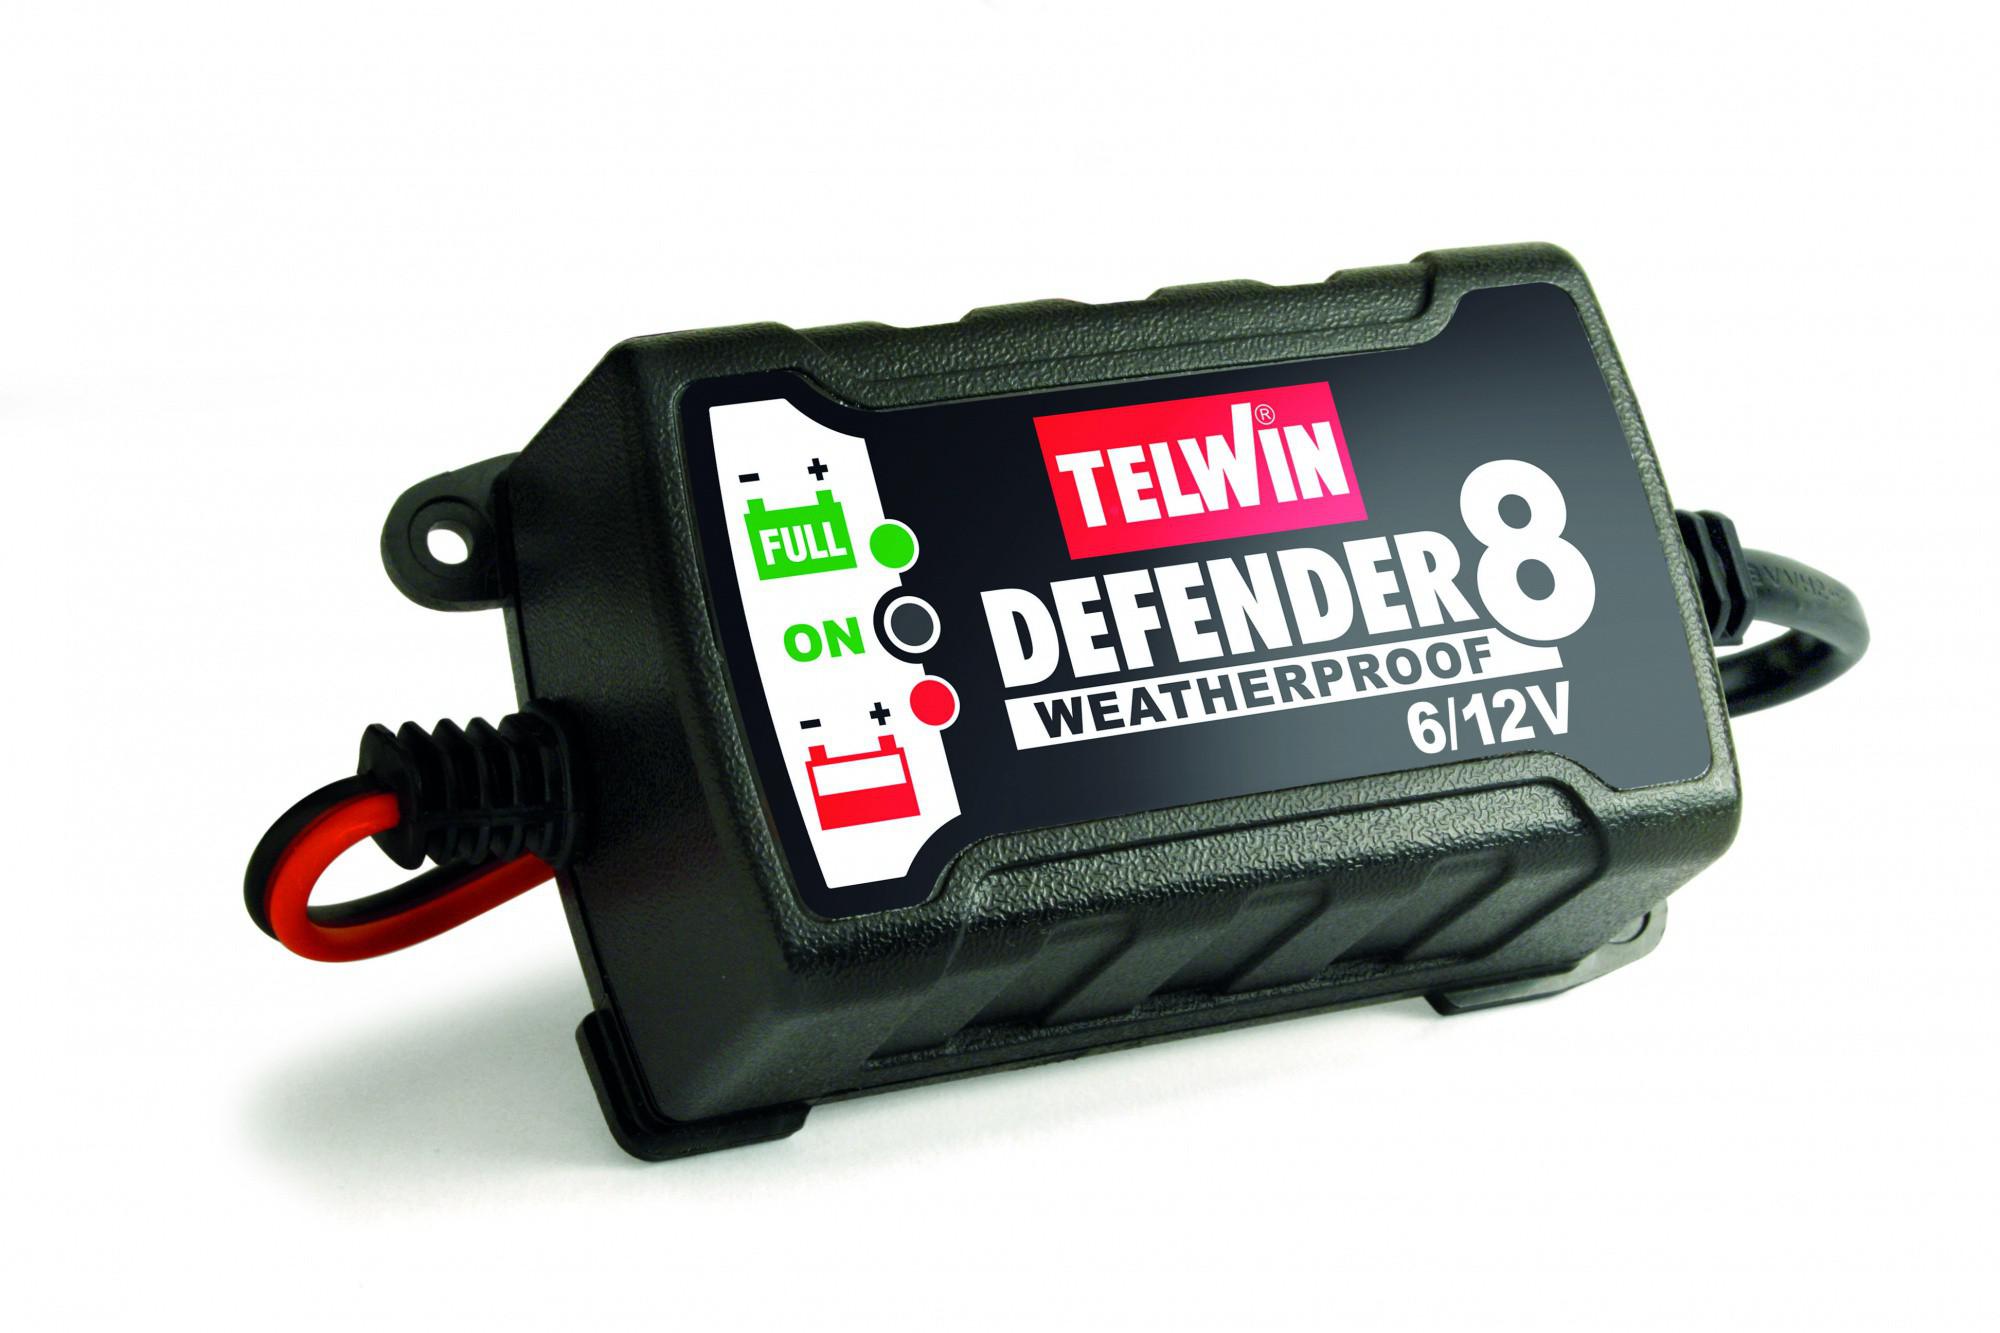 фото Зарядное устройство telwin defender 8 6v/12v (807553)